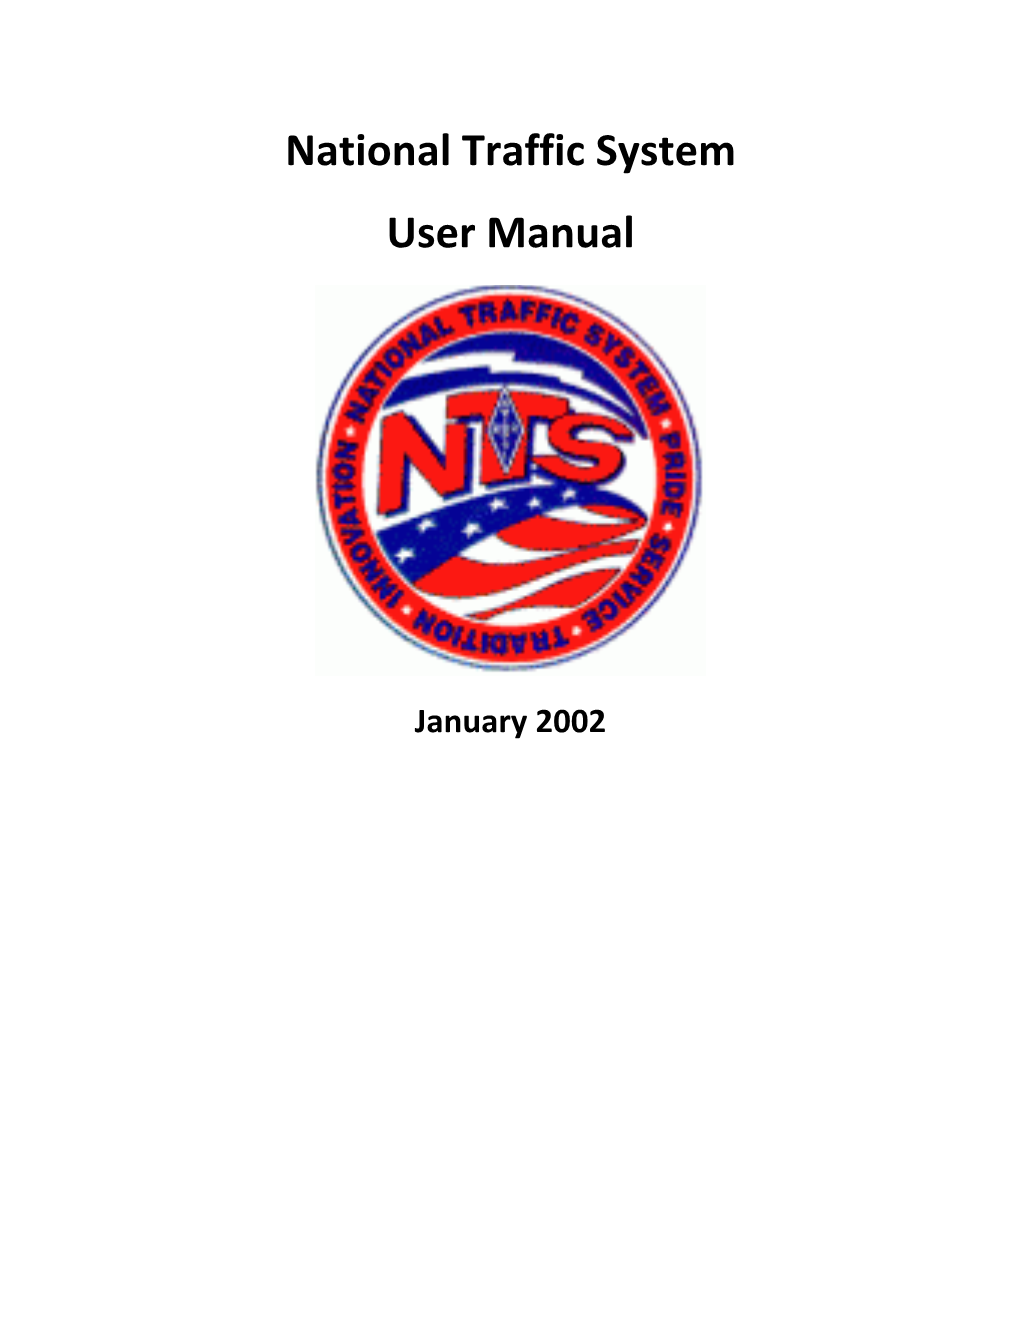 National Traffic System User Manual